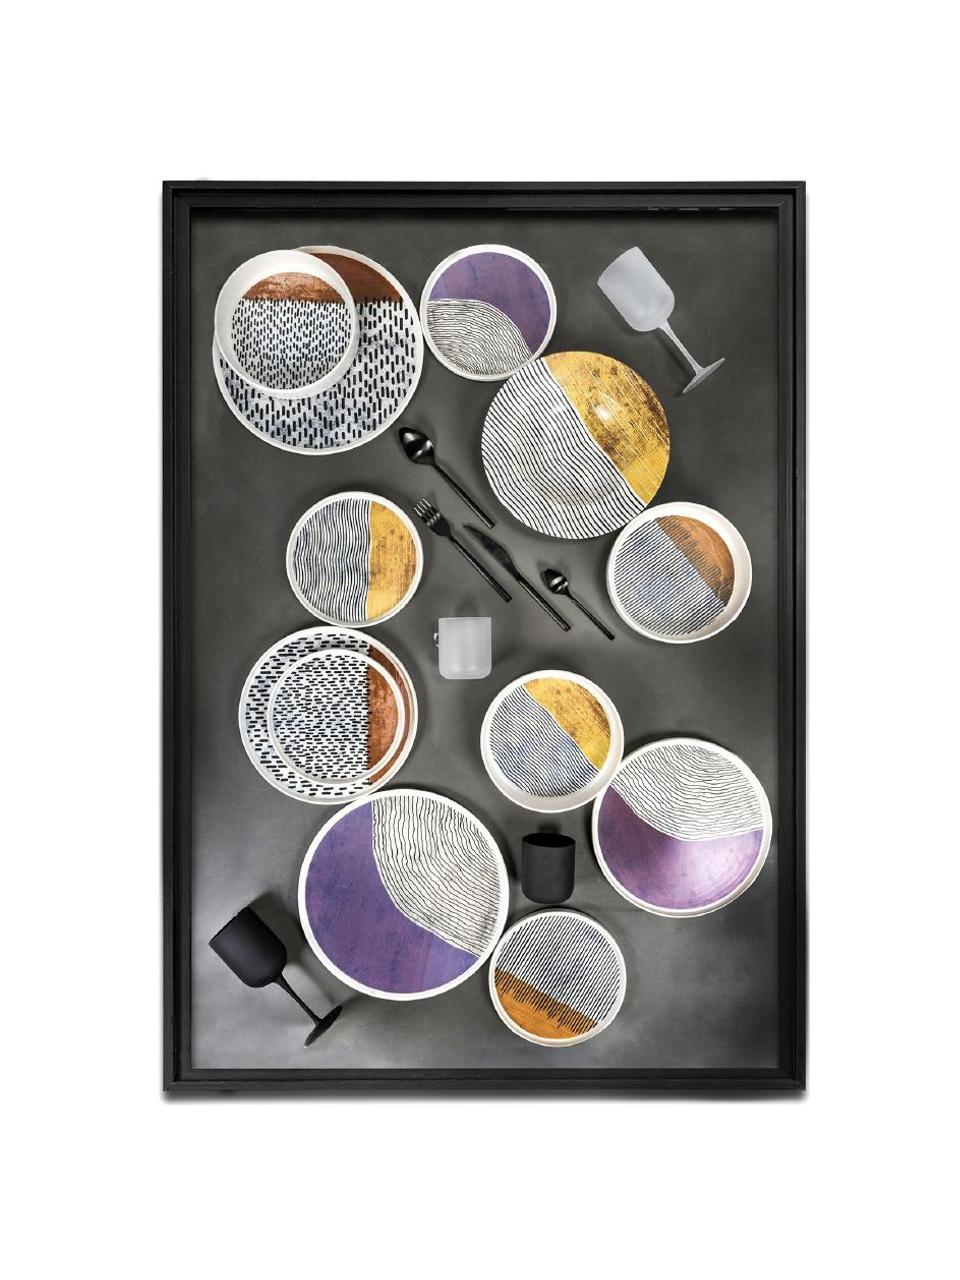 Set de platos hondos de diseño Switch, 4 uds., Cerámica, Gris claro, negro, multicolor, Ø 21 cm